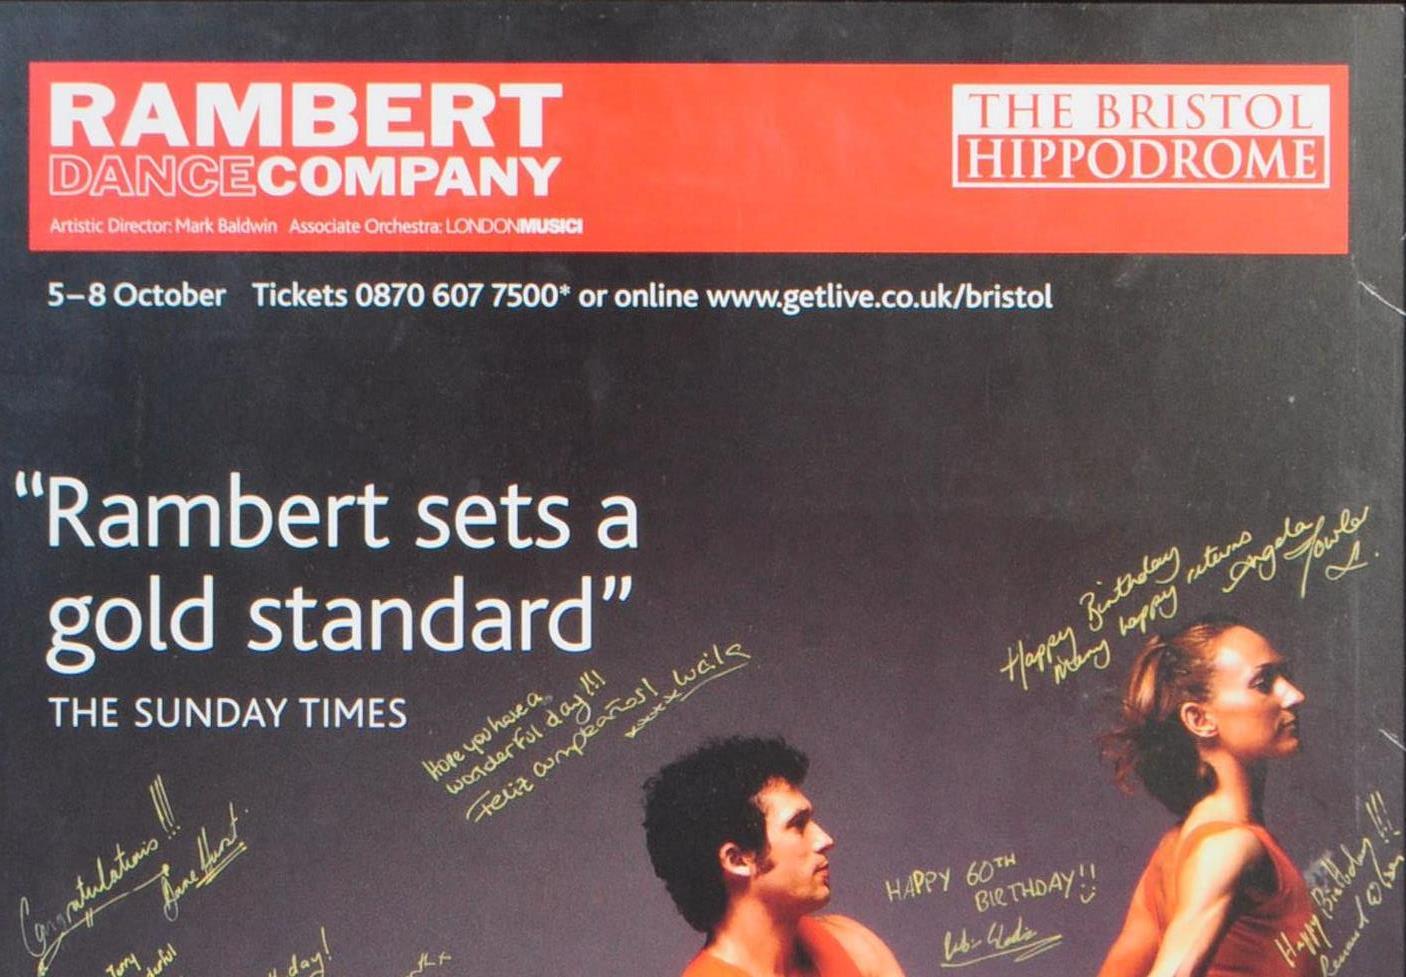 2005 SIGNED RAMBERT DANCE COMPANY BRISTOL HIPPODROME POSTER - Image 3 of 7